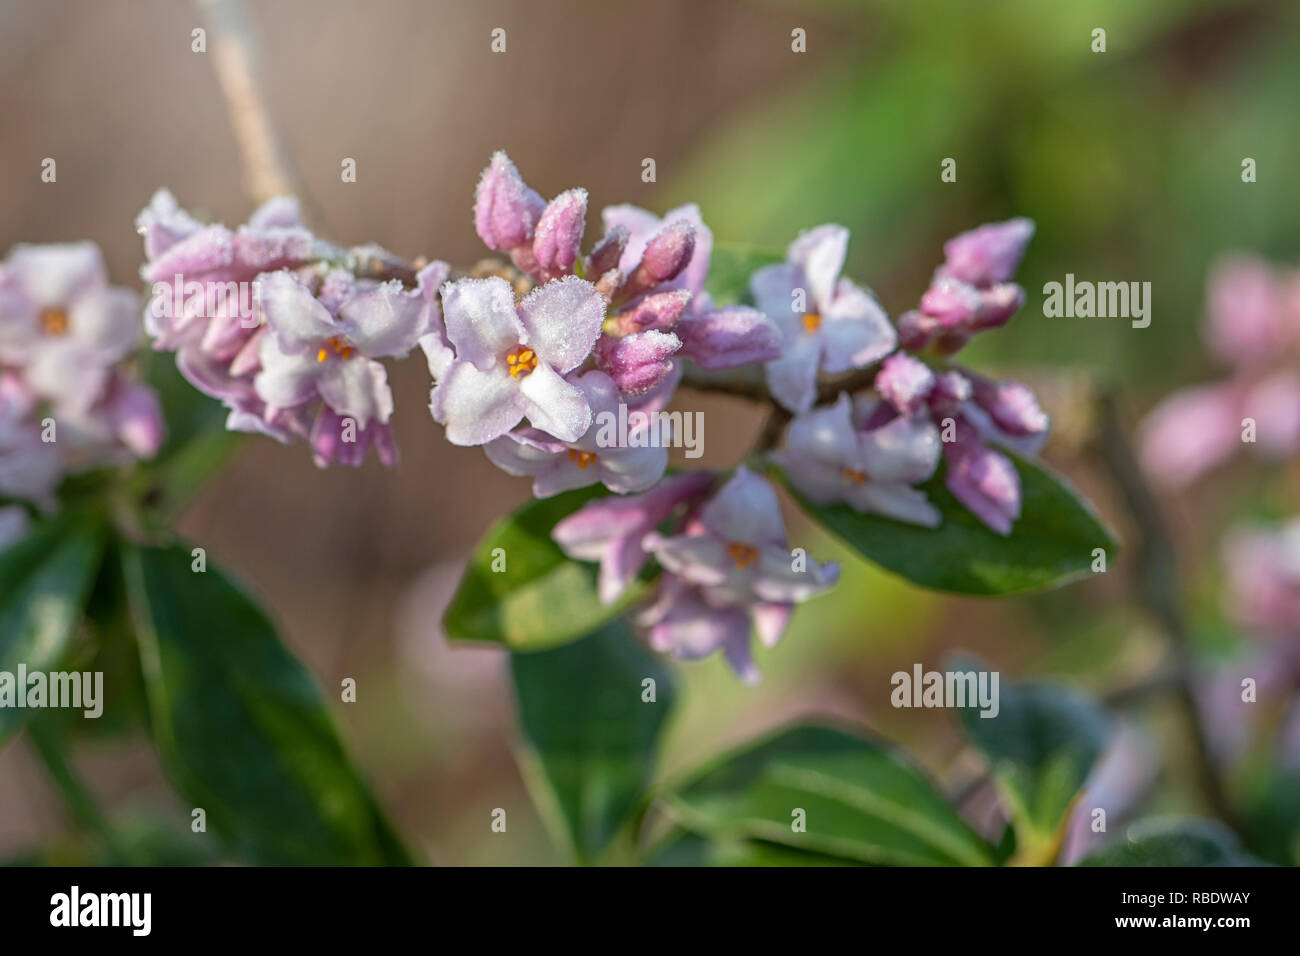 Close-up image of the early spring flowering shrub Daphne Bholua 'Jacqueline Postill' Stock Photo